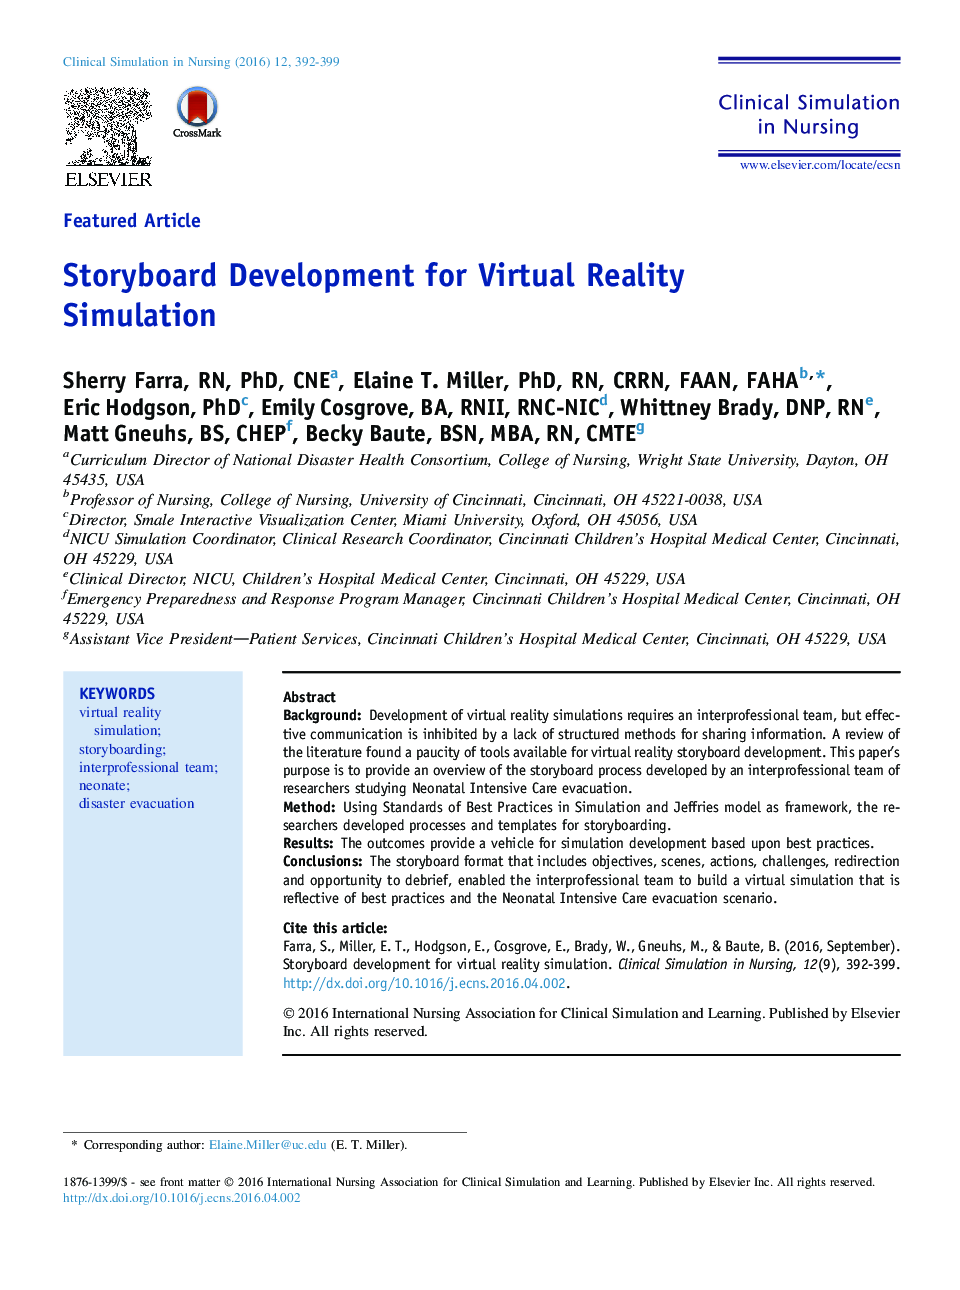 Storyboard Development for Virtual Reality Simulation